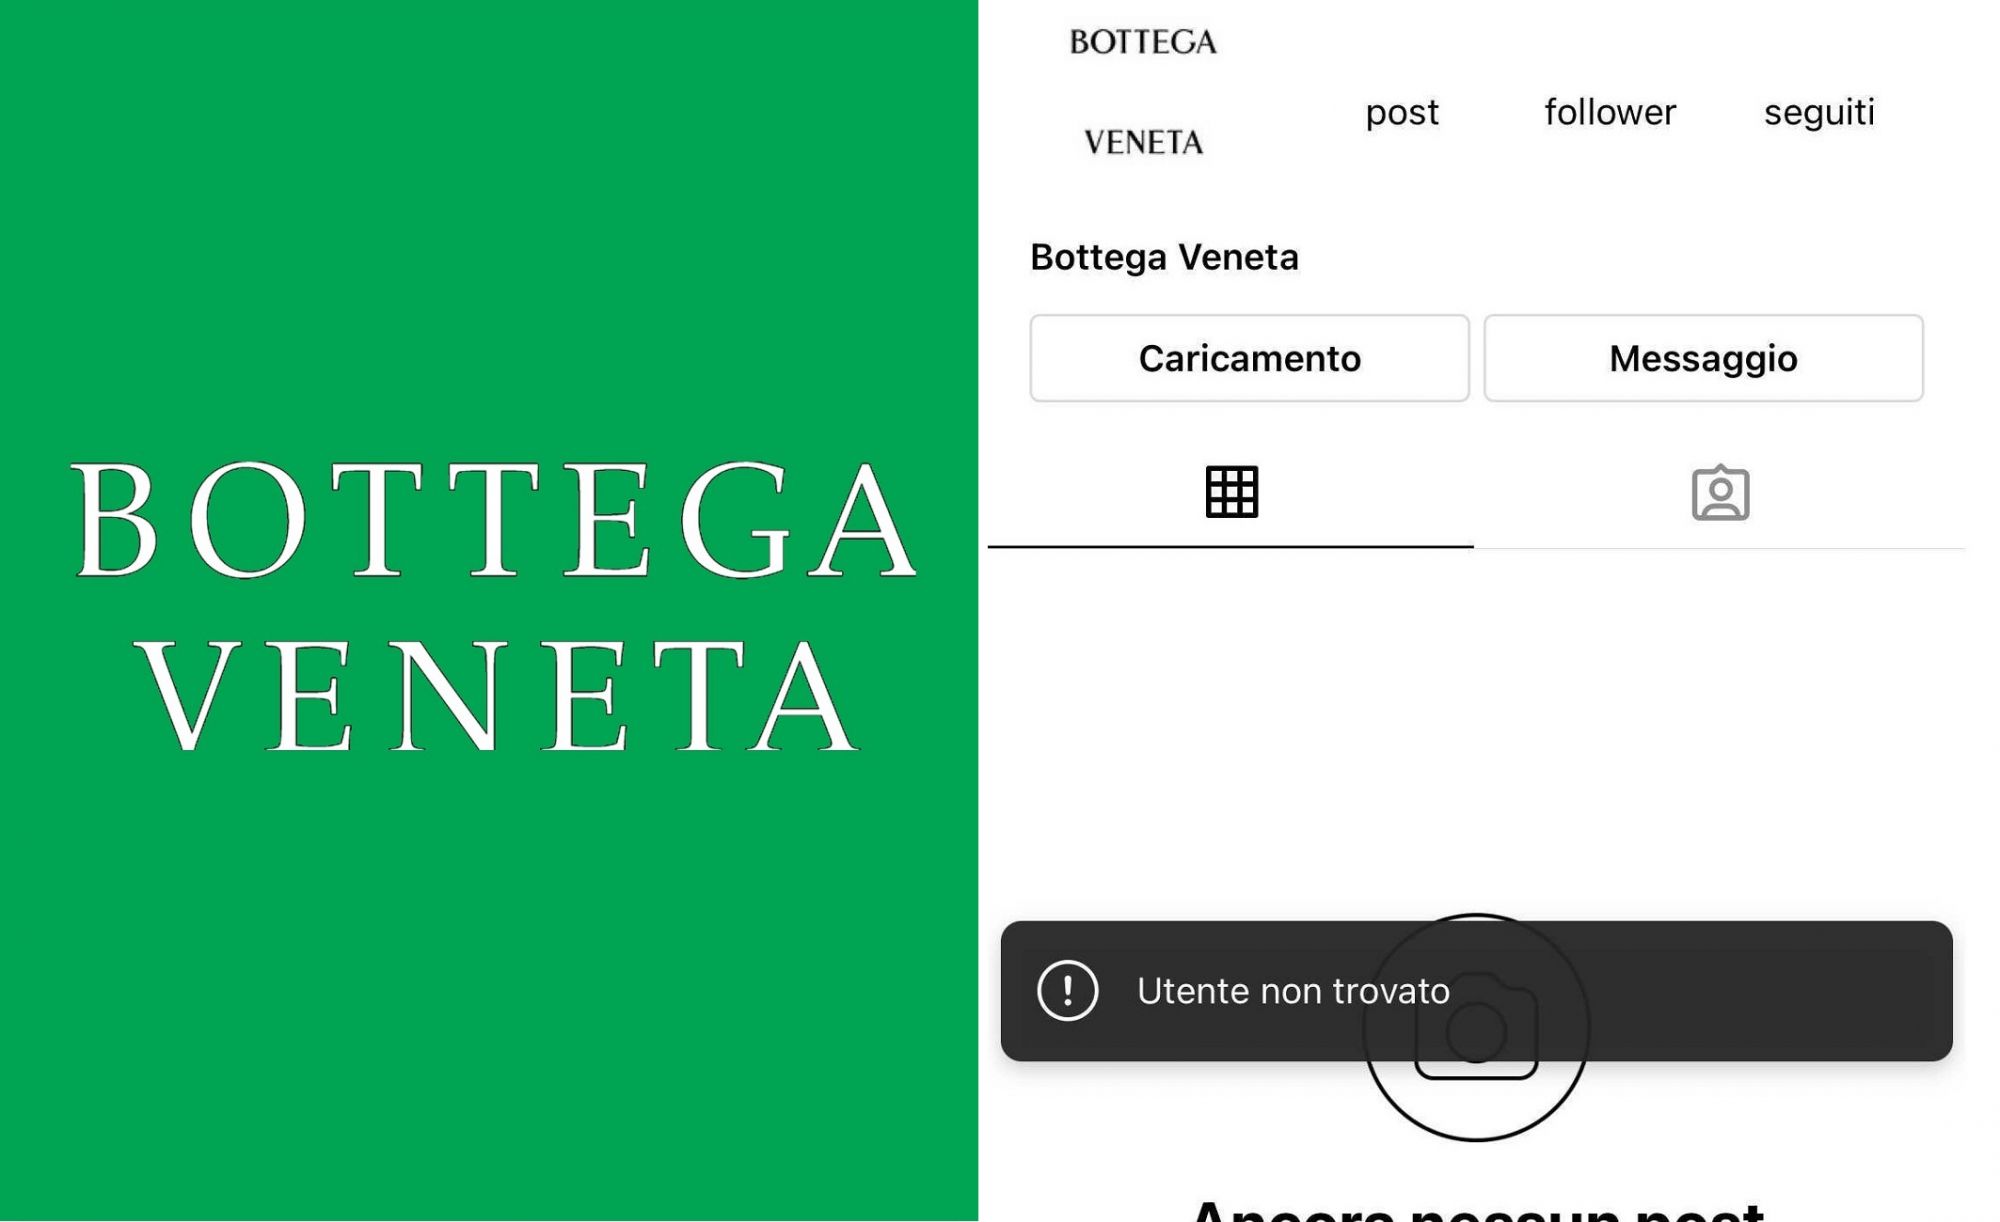 Why did Bottega Veneta delete all their social media accounts?